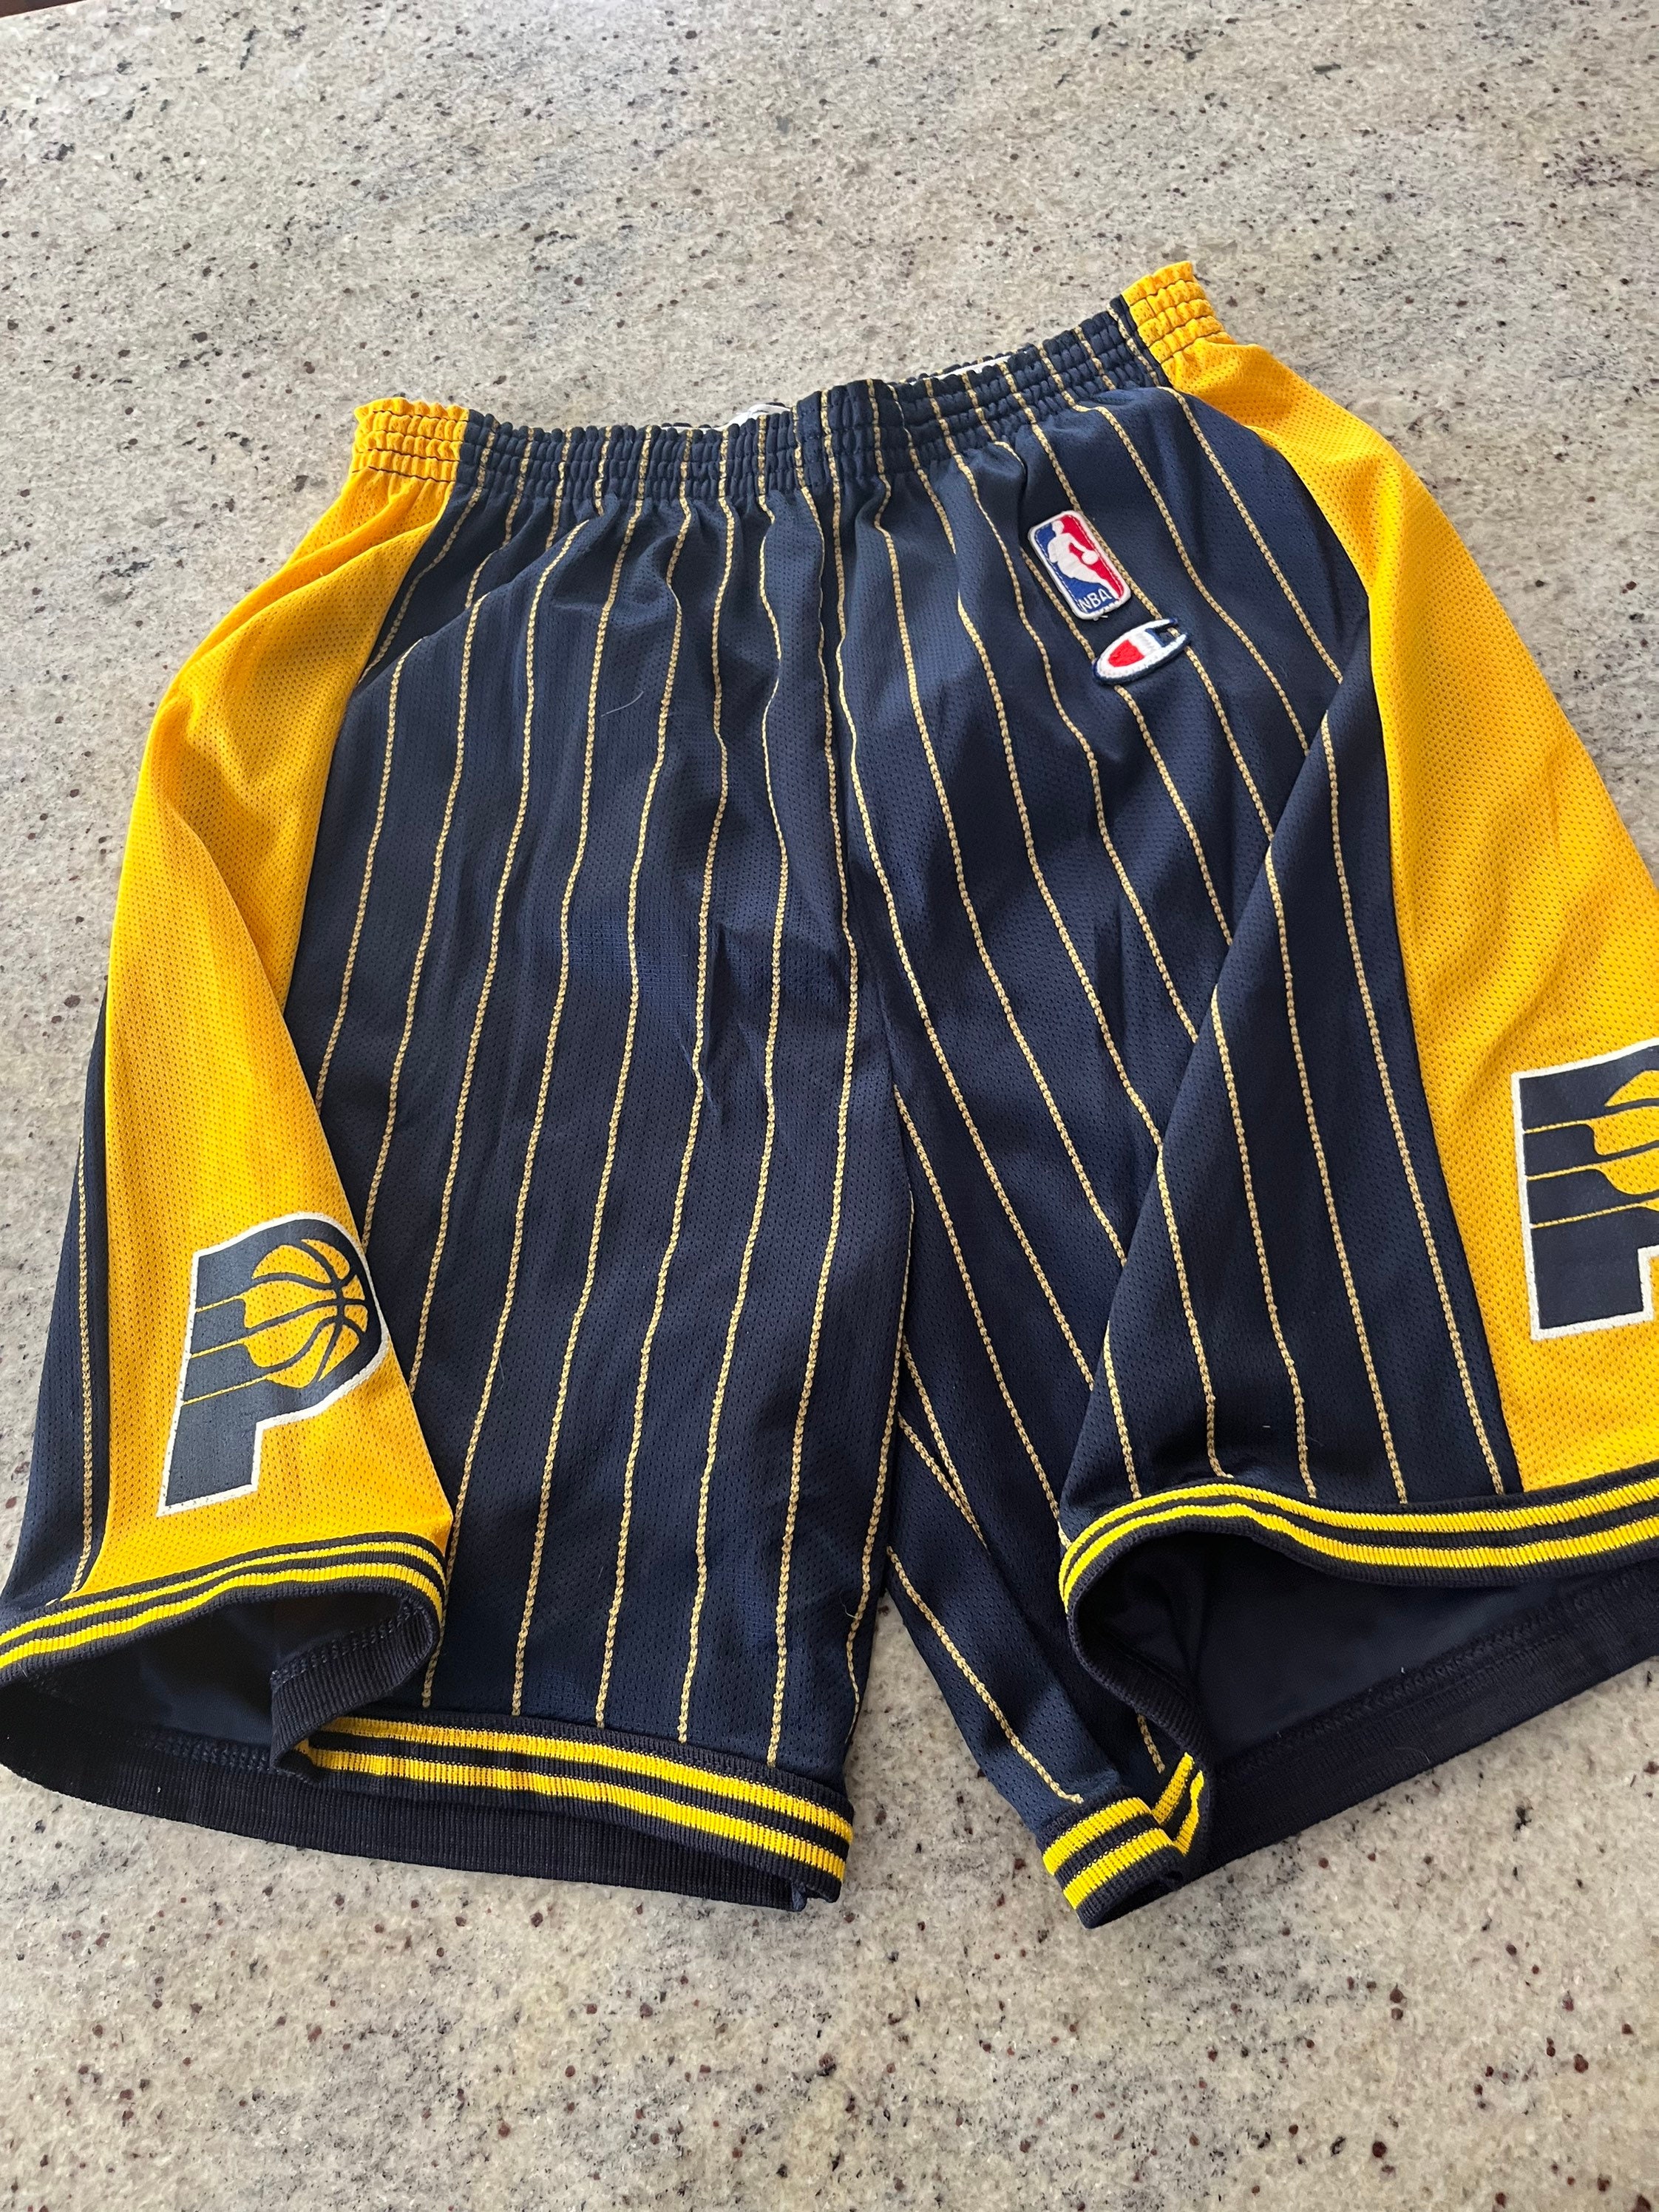 Champion Vintage Home Indiana Pacers NBA Basketball Shorts